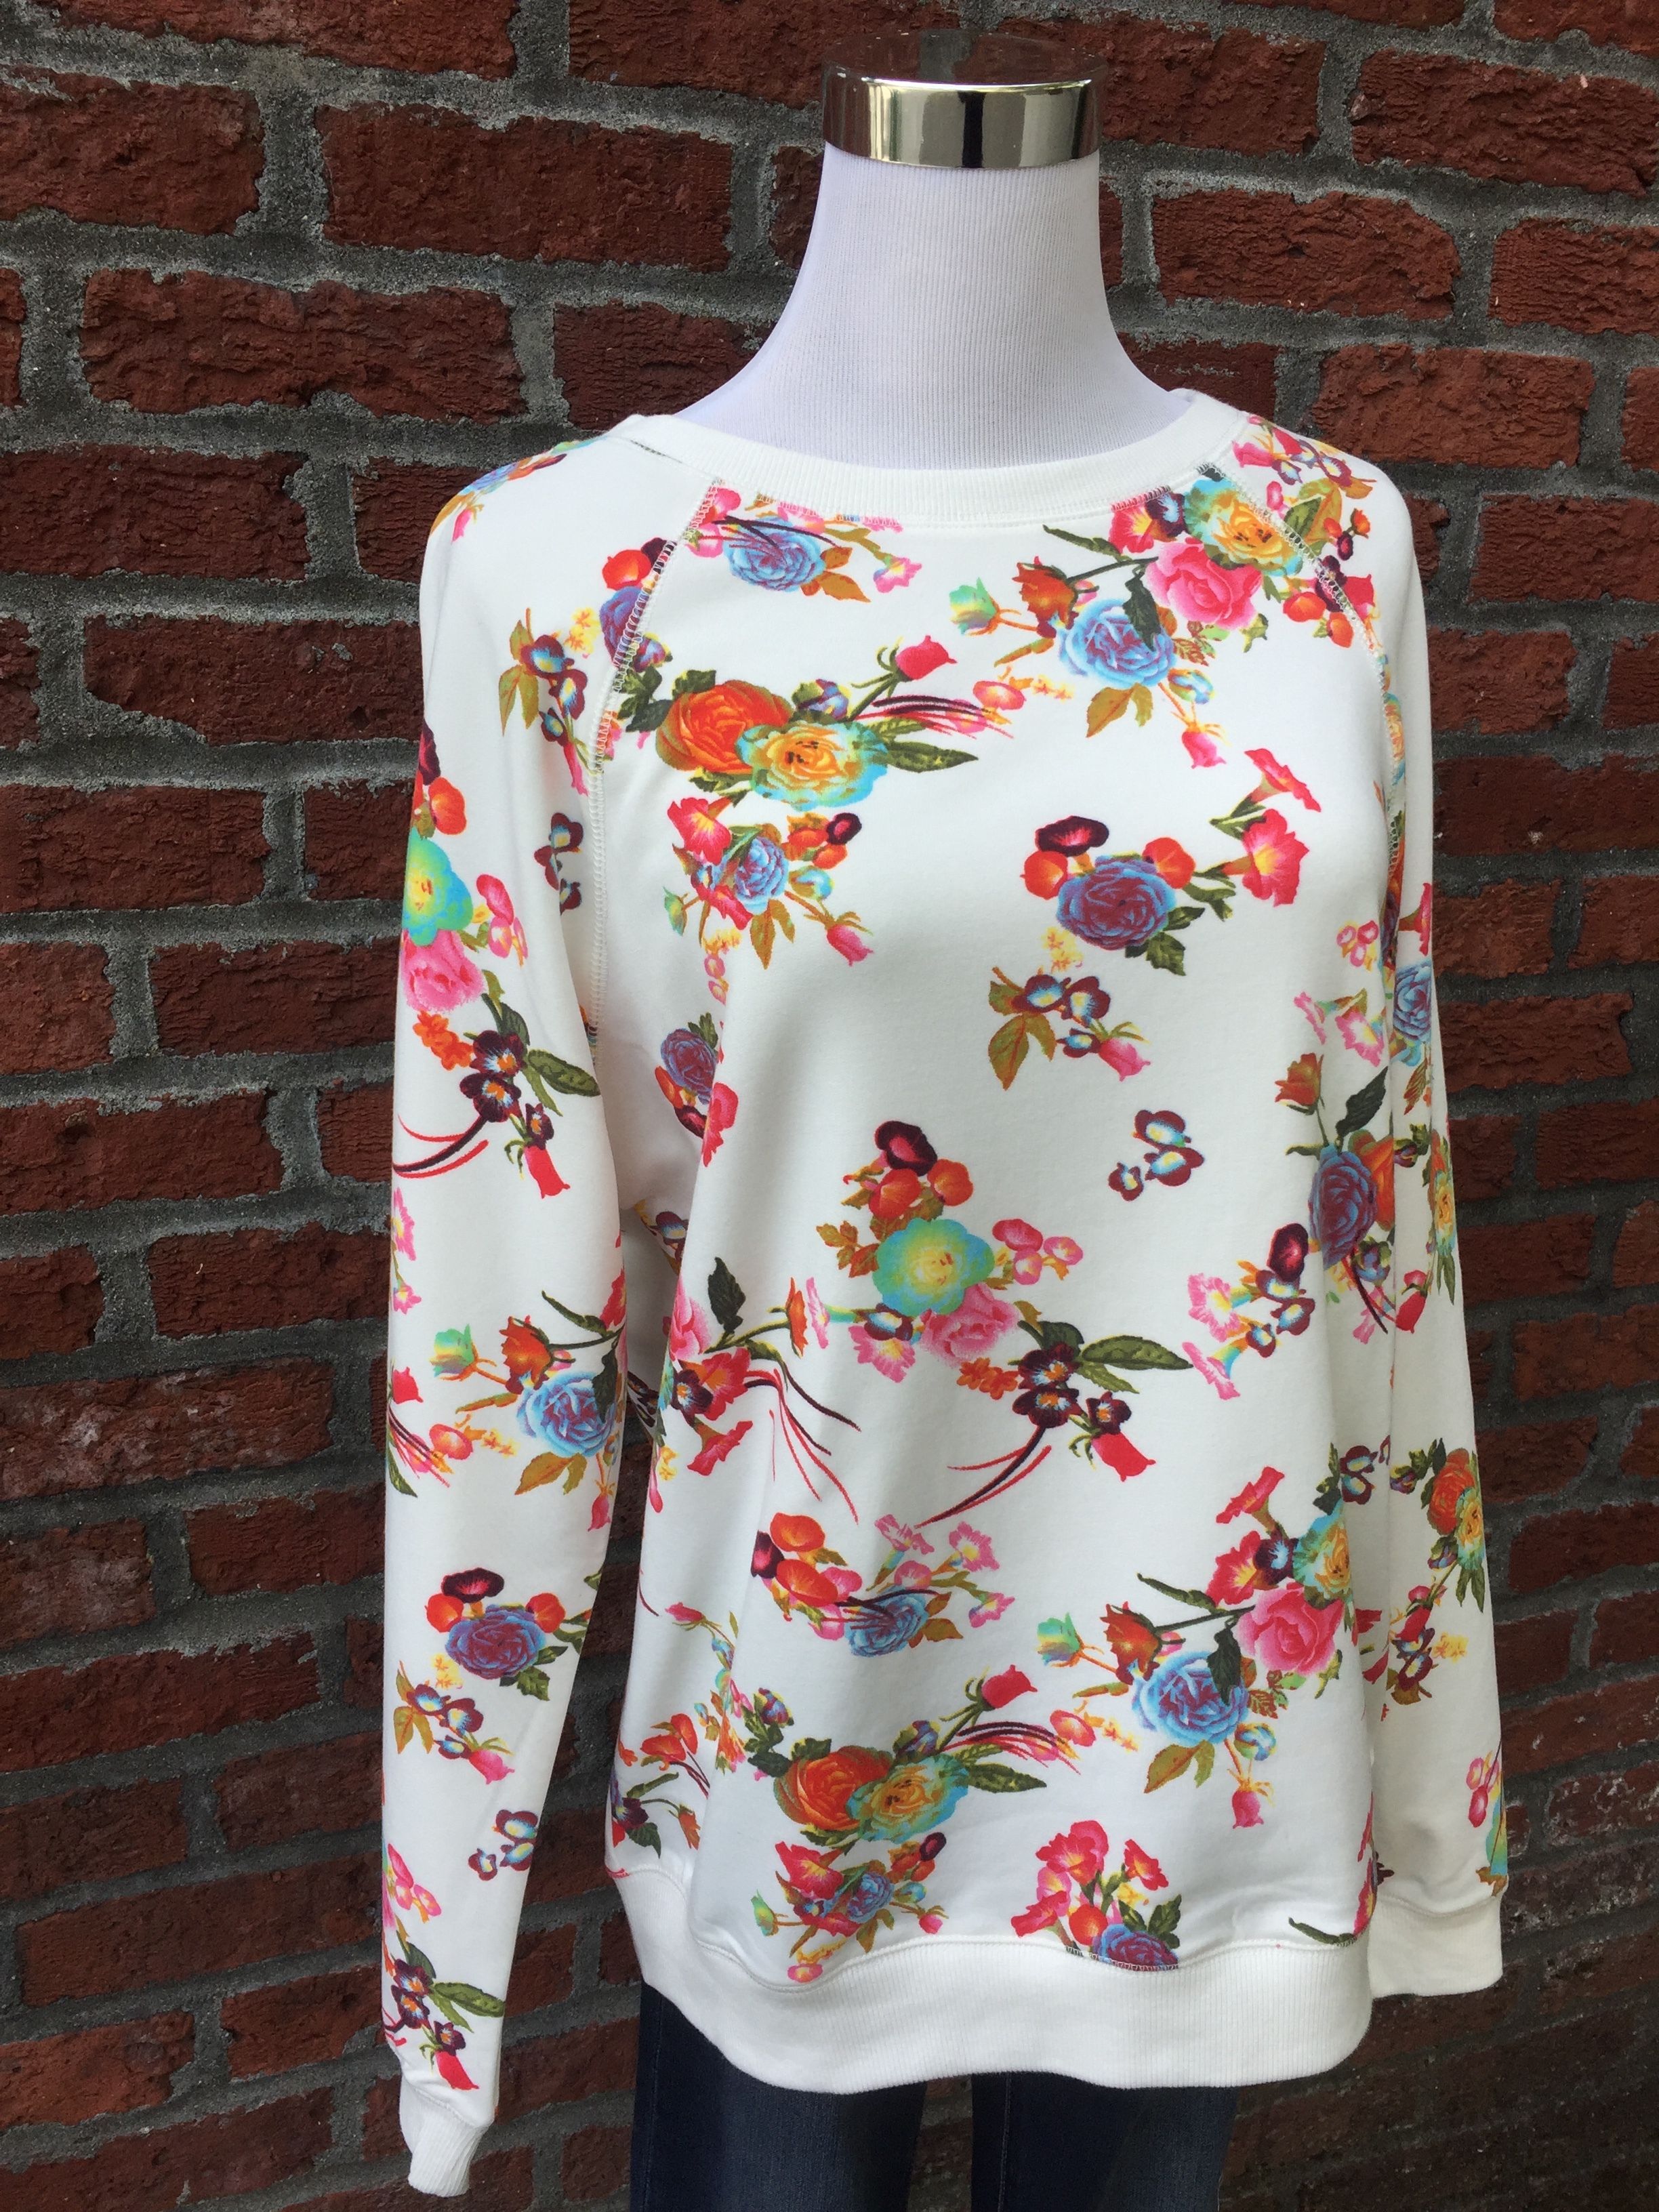 Hailey & Co floral sweatshirt ($42)